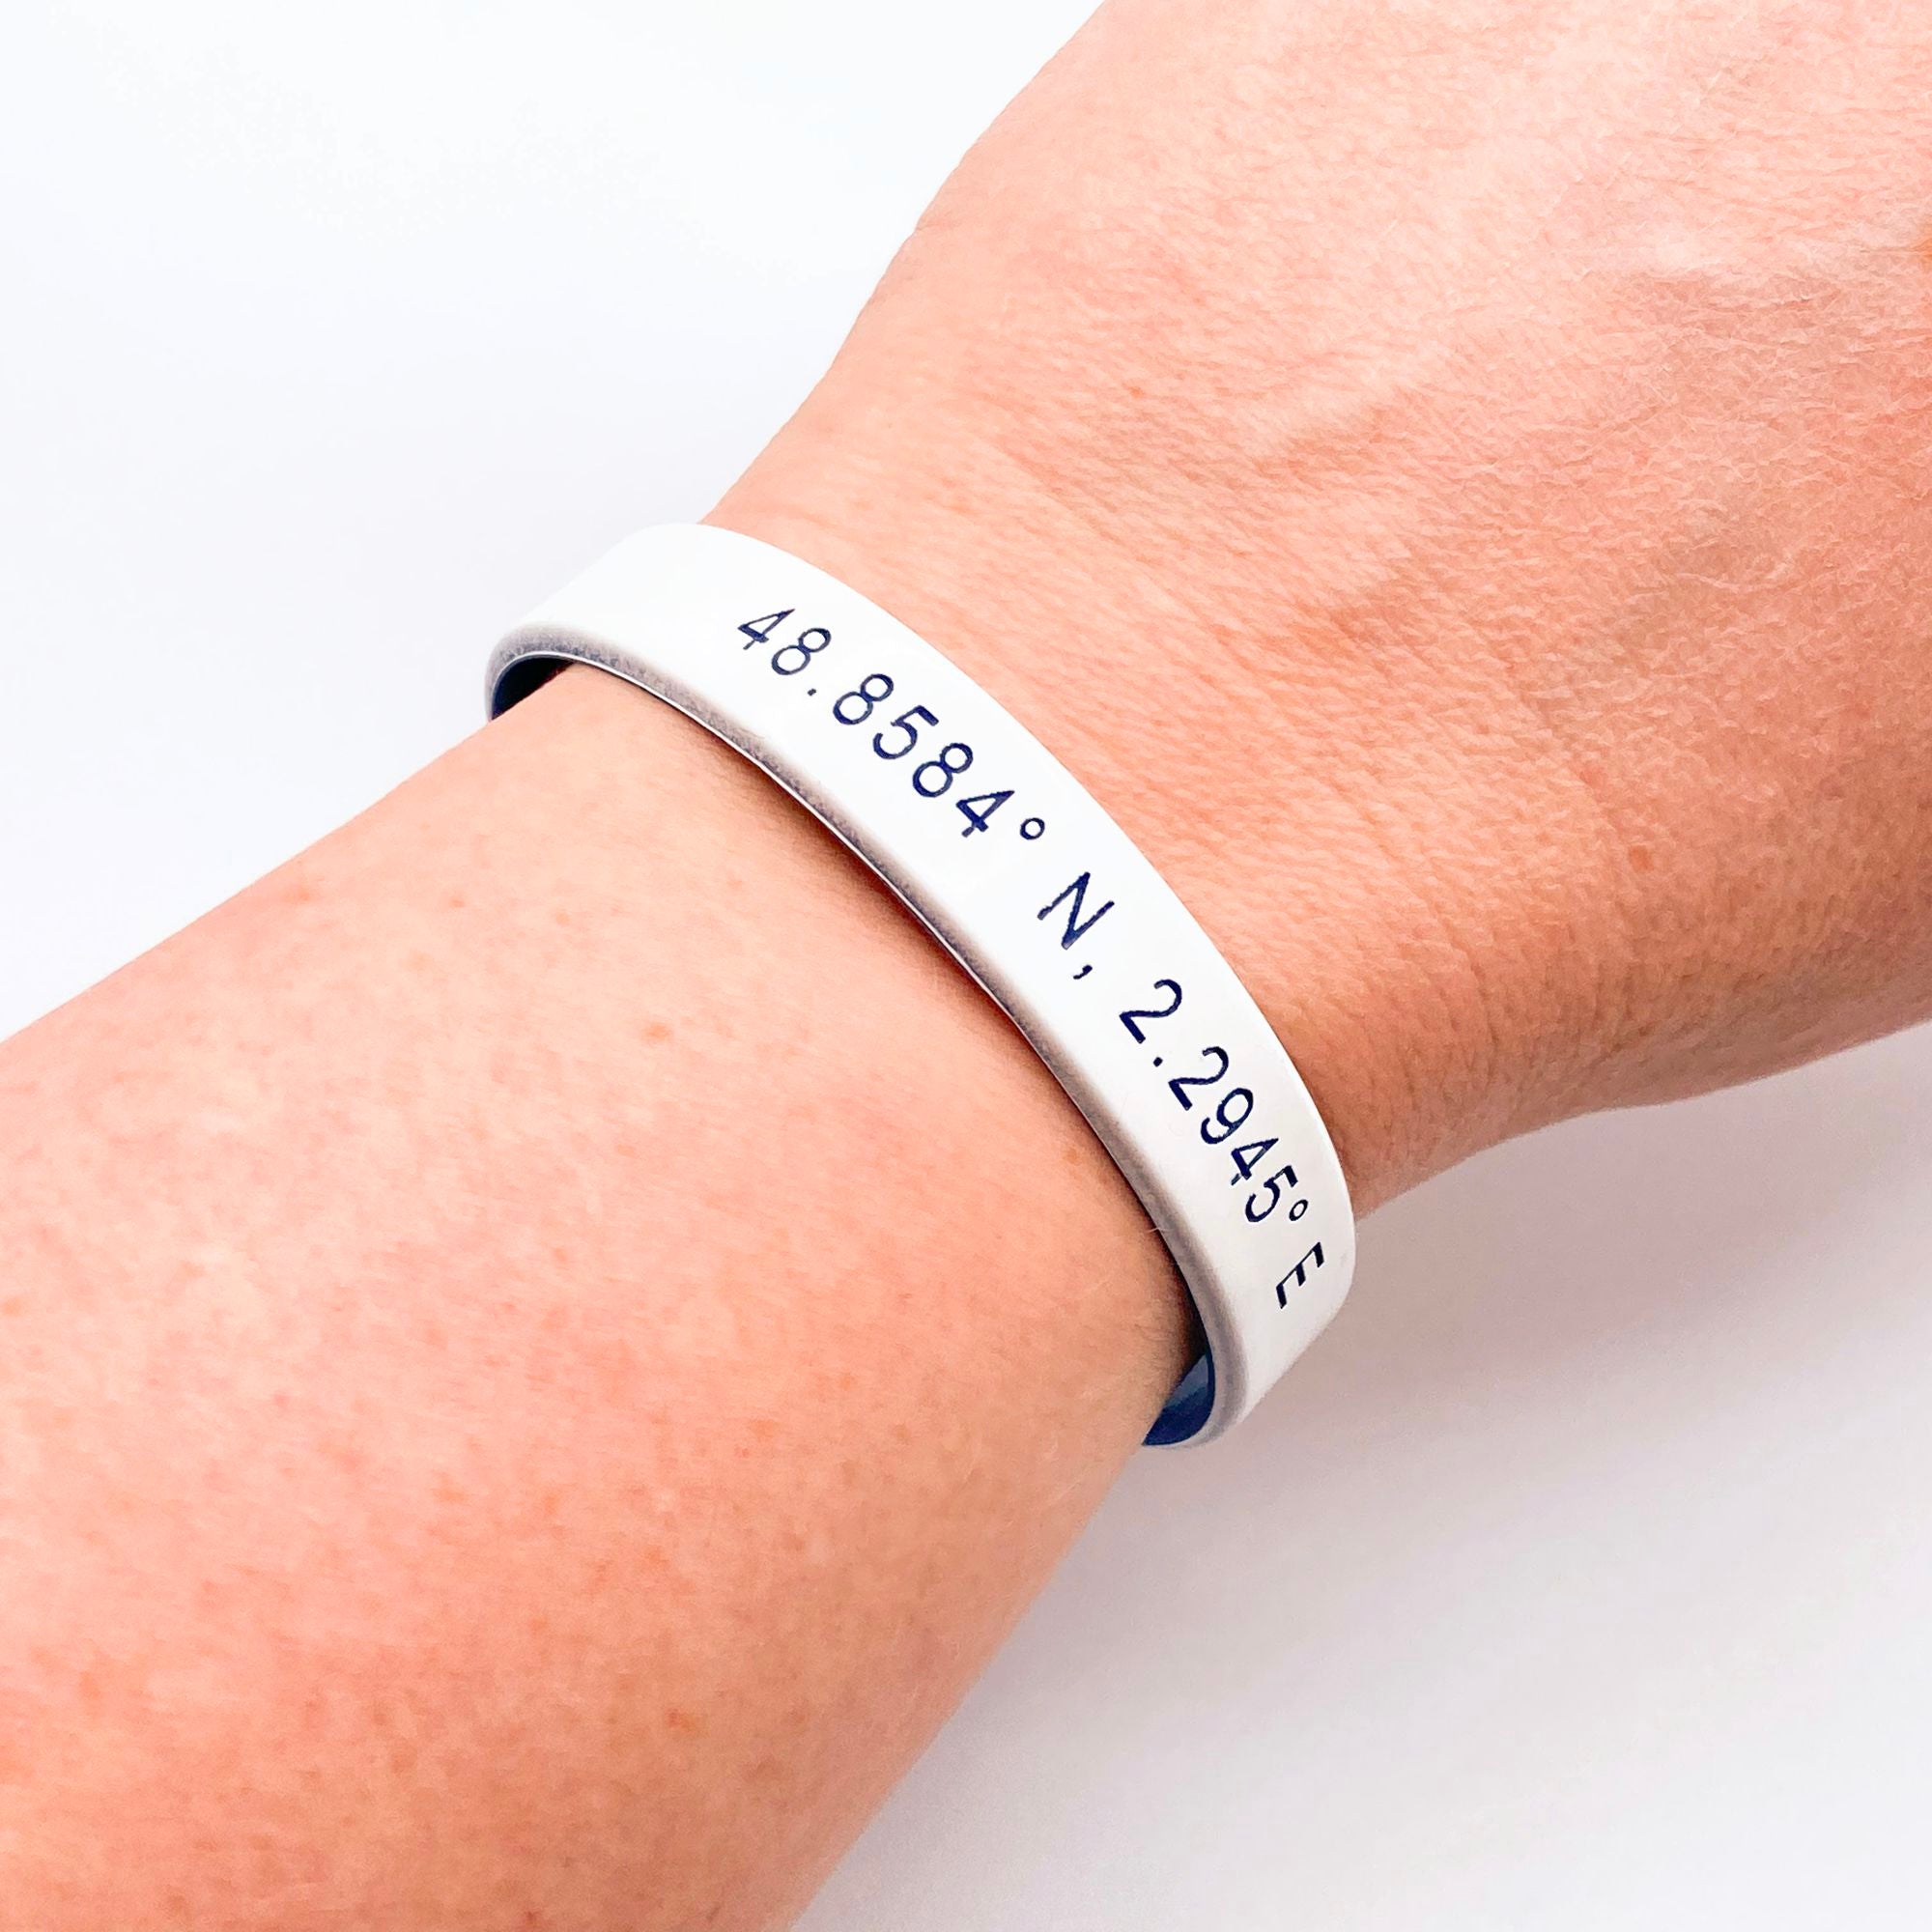 grid coordinates personalised wristband white blue gift